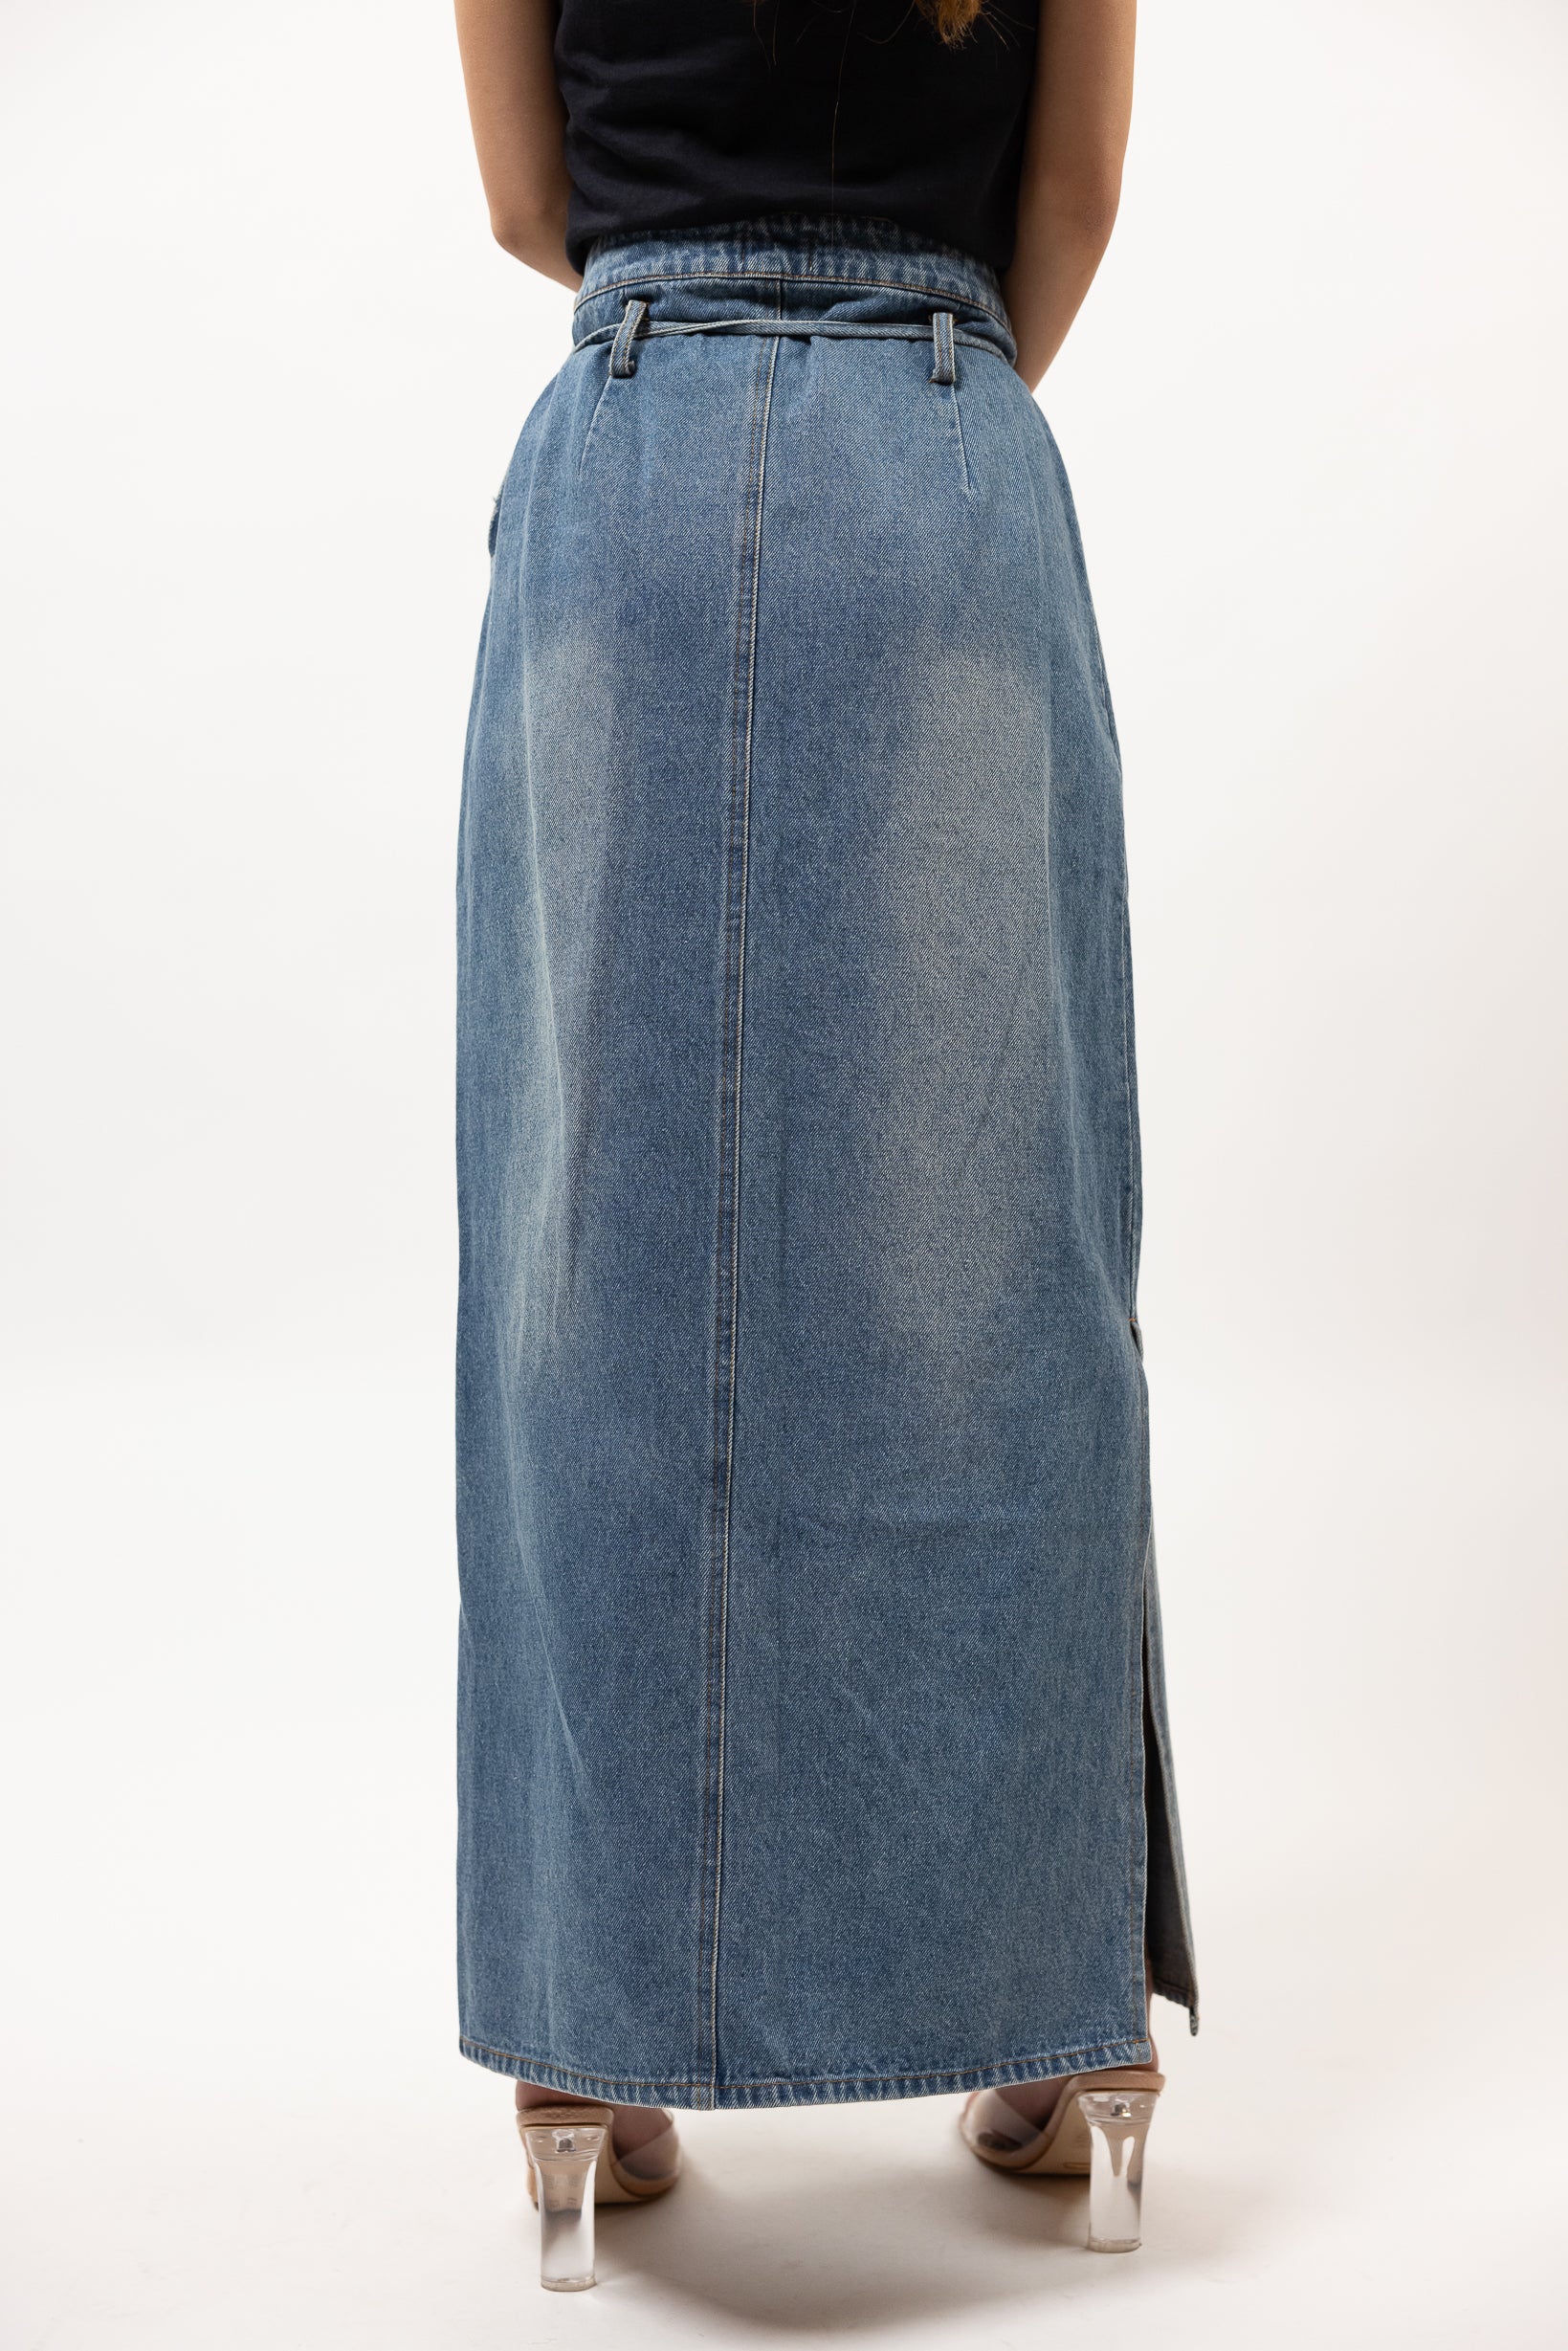 SA22332-BLU-denim-skirt